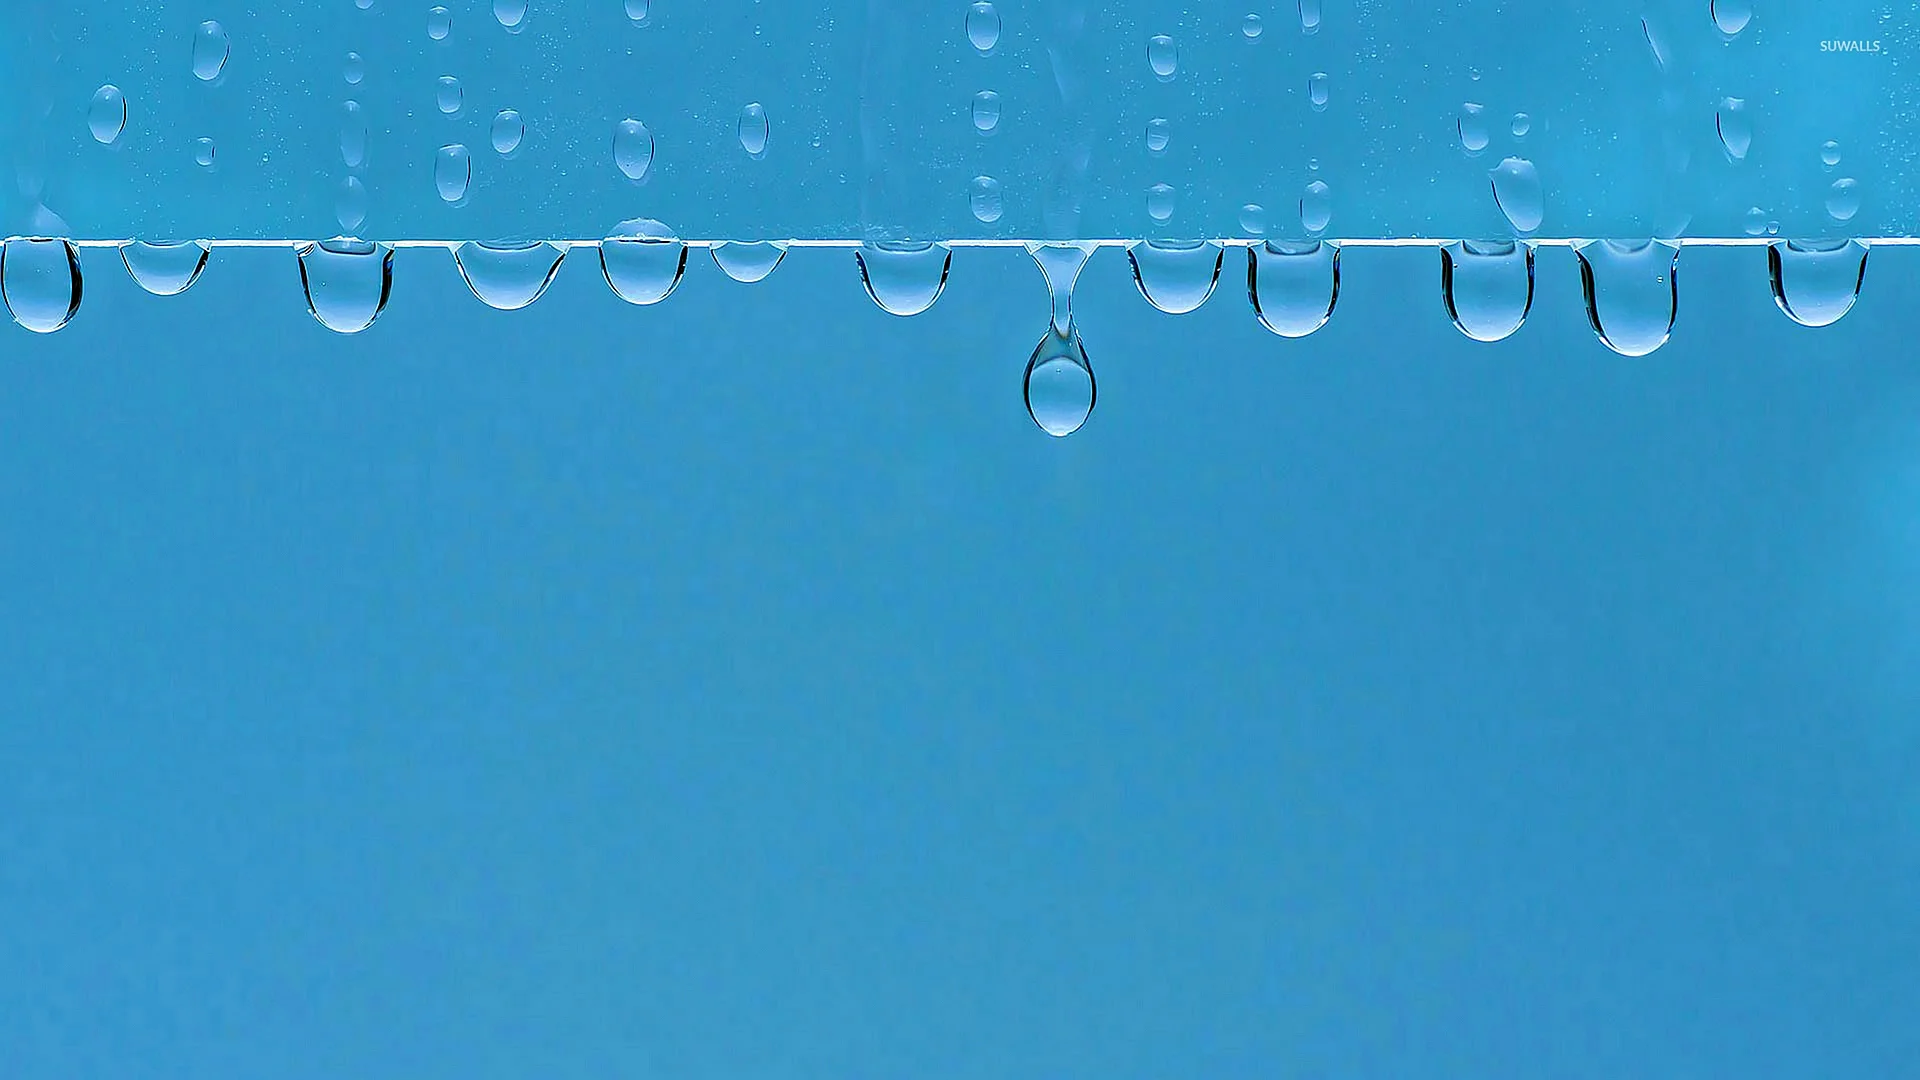 Dripping Water Wallpaper